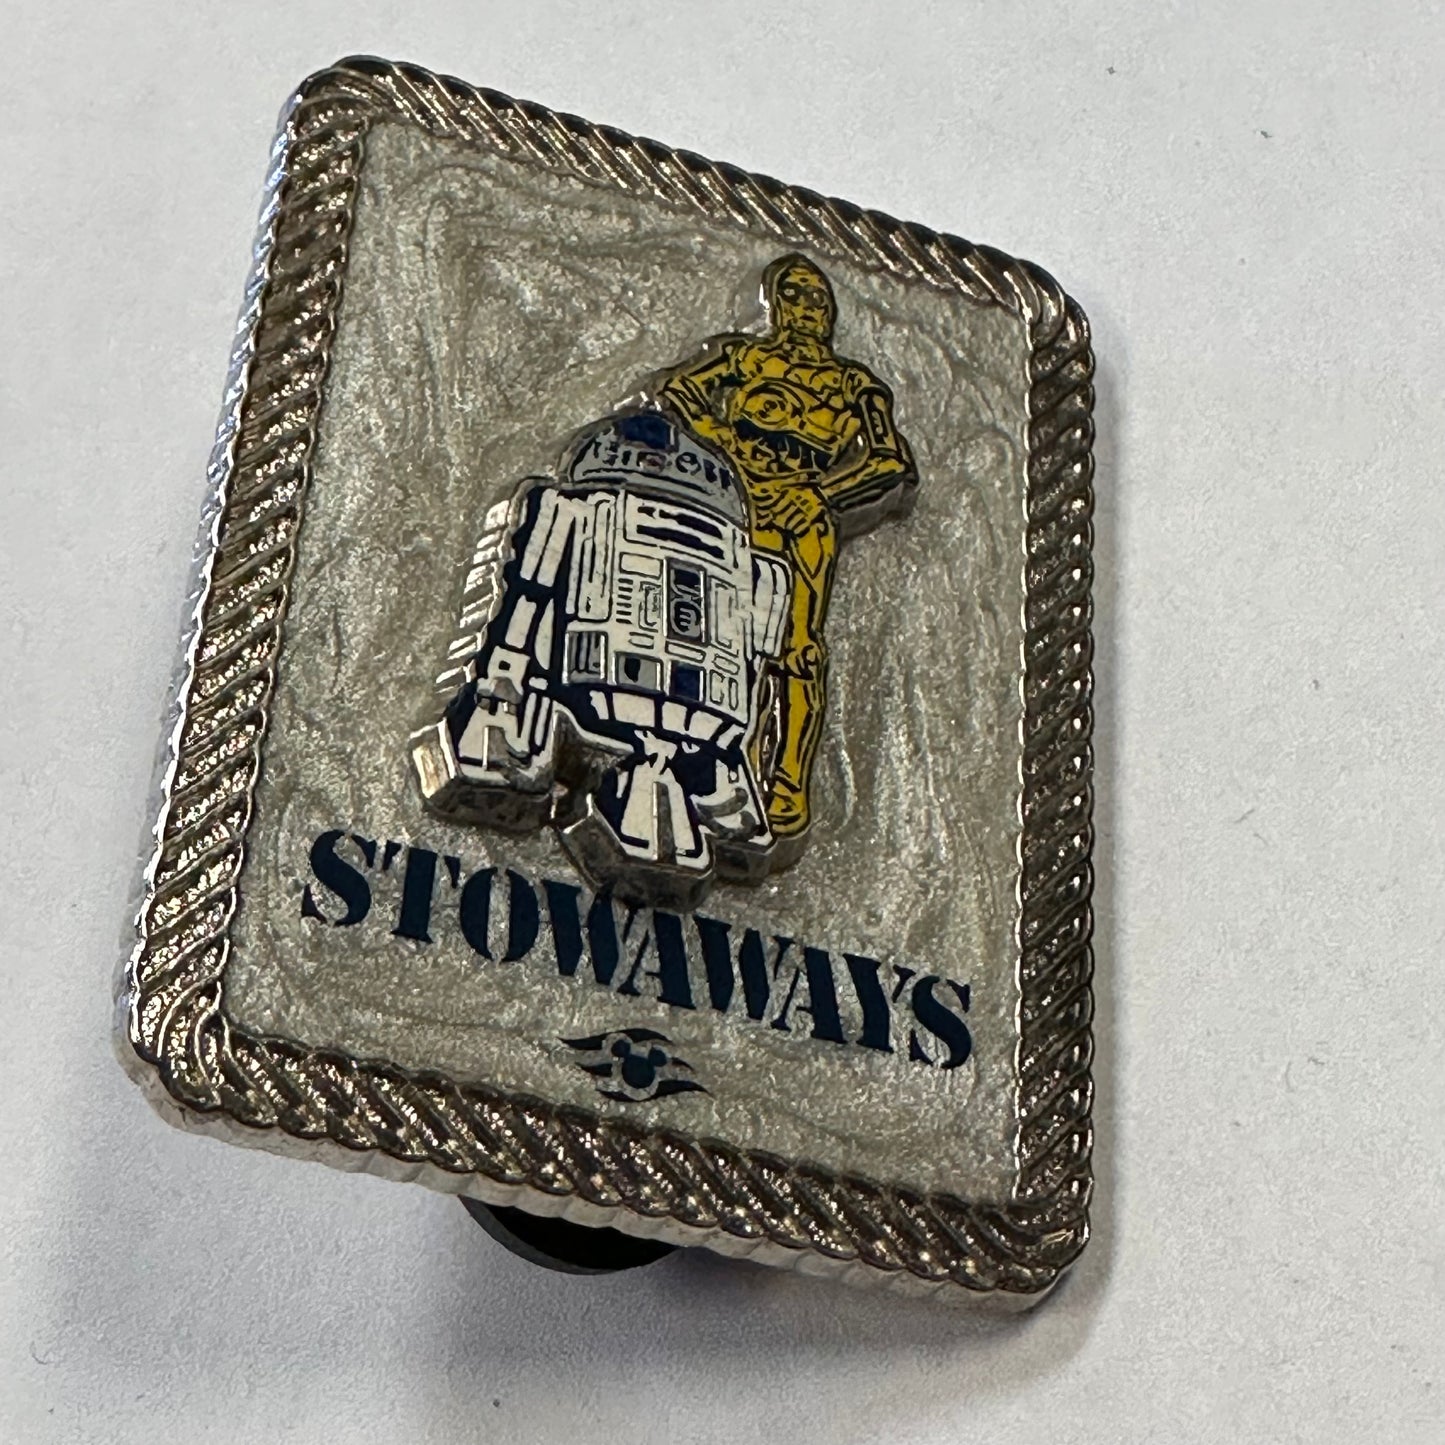 Stowaways Star Wars Pin